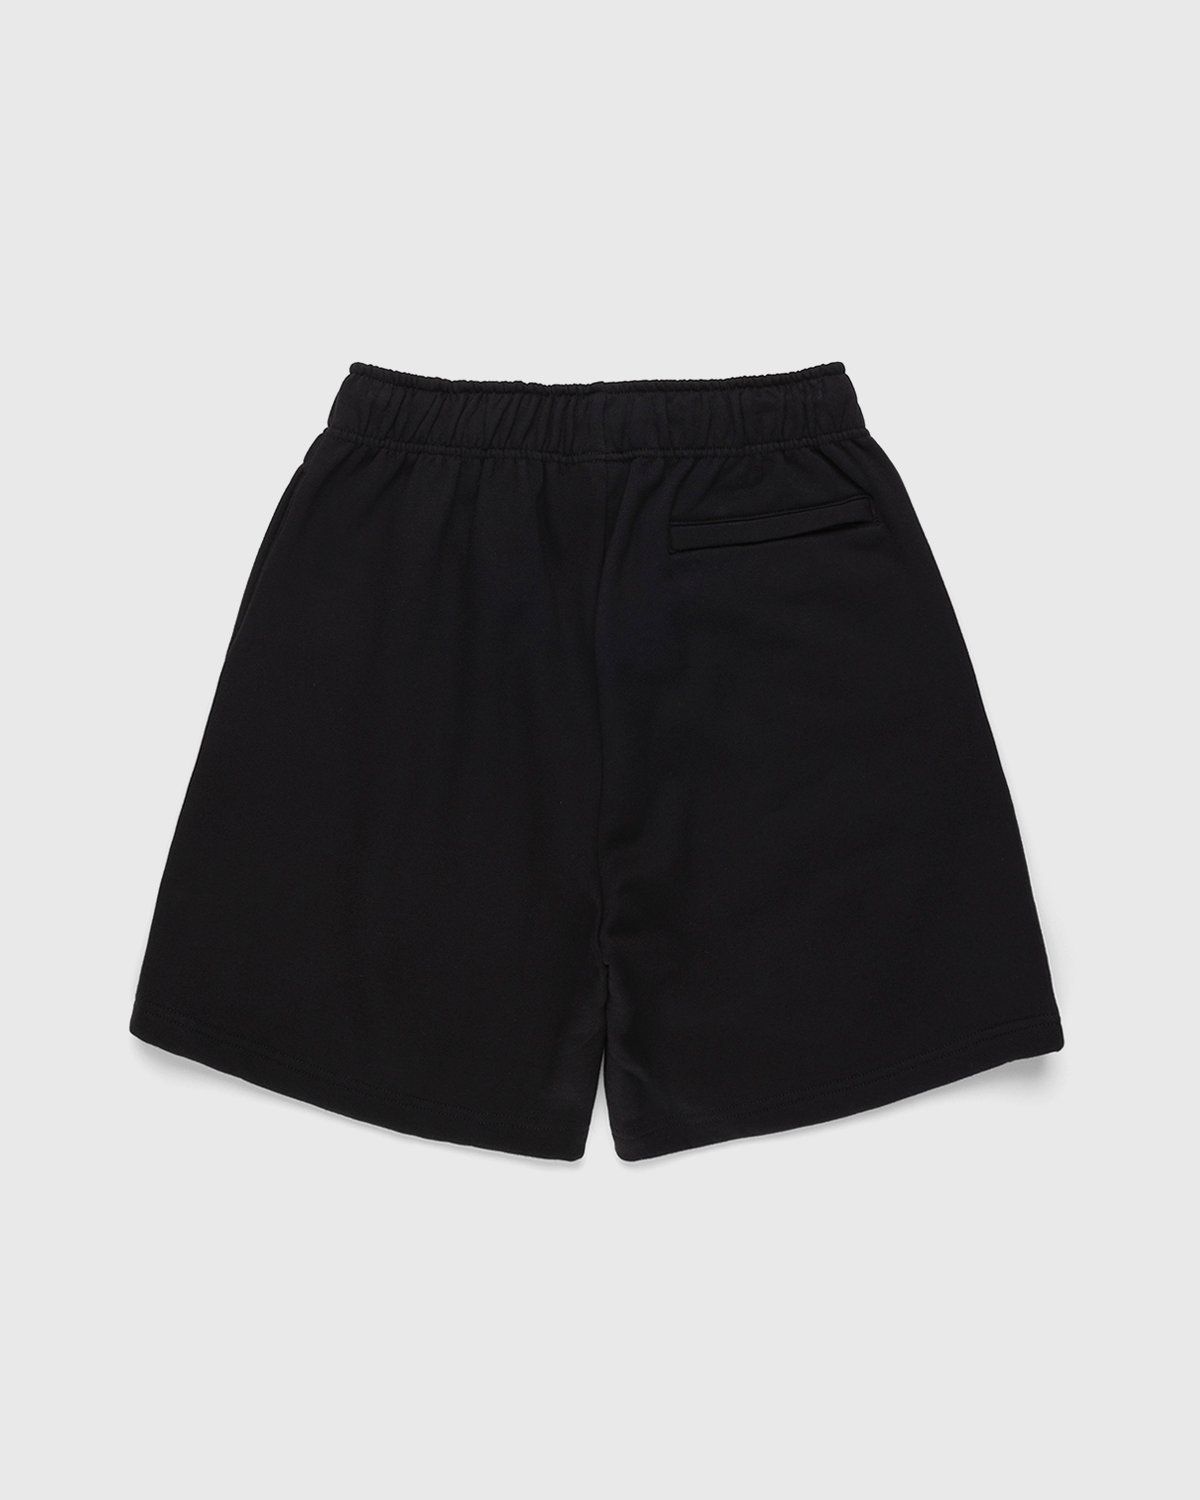 Patta – Basic Summer Jogging Shorts Black - Shorts - Black - Image 2